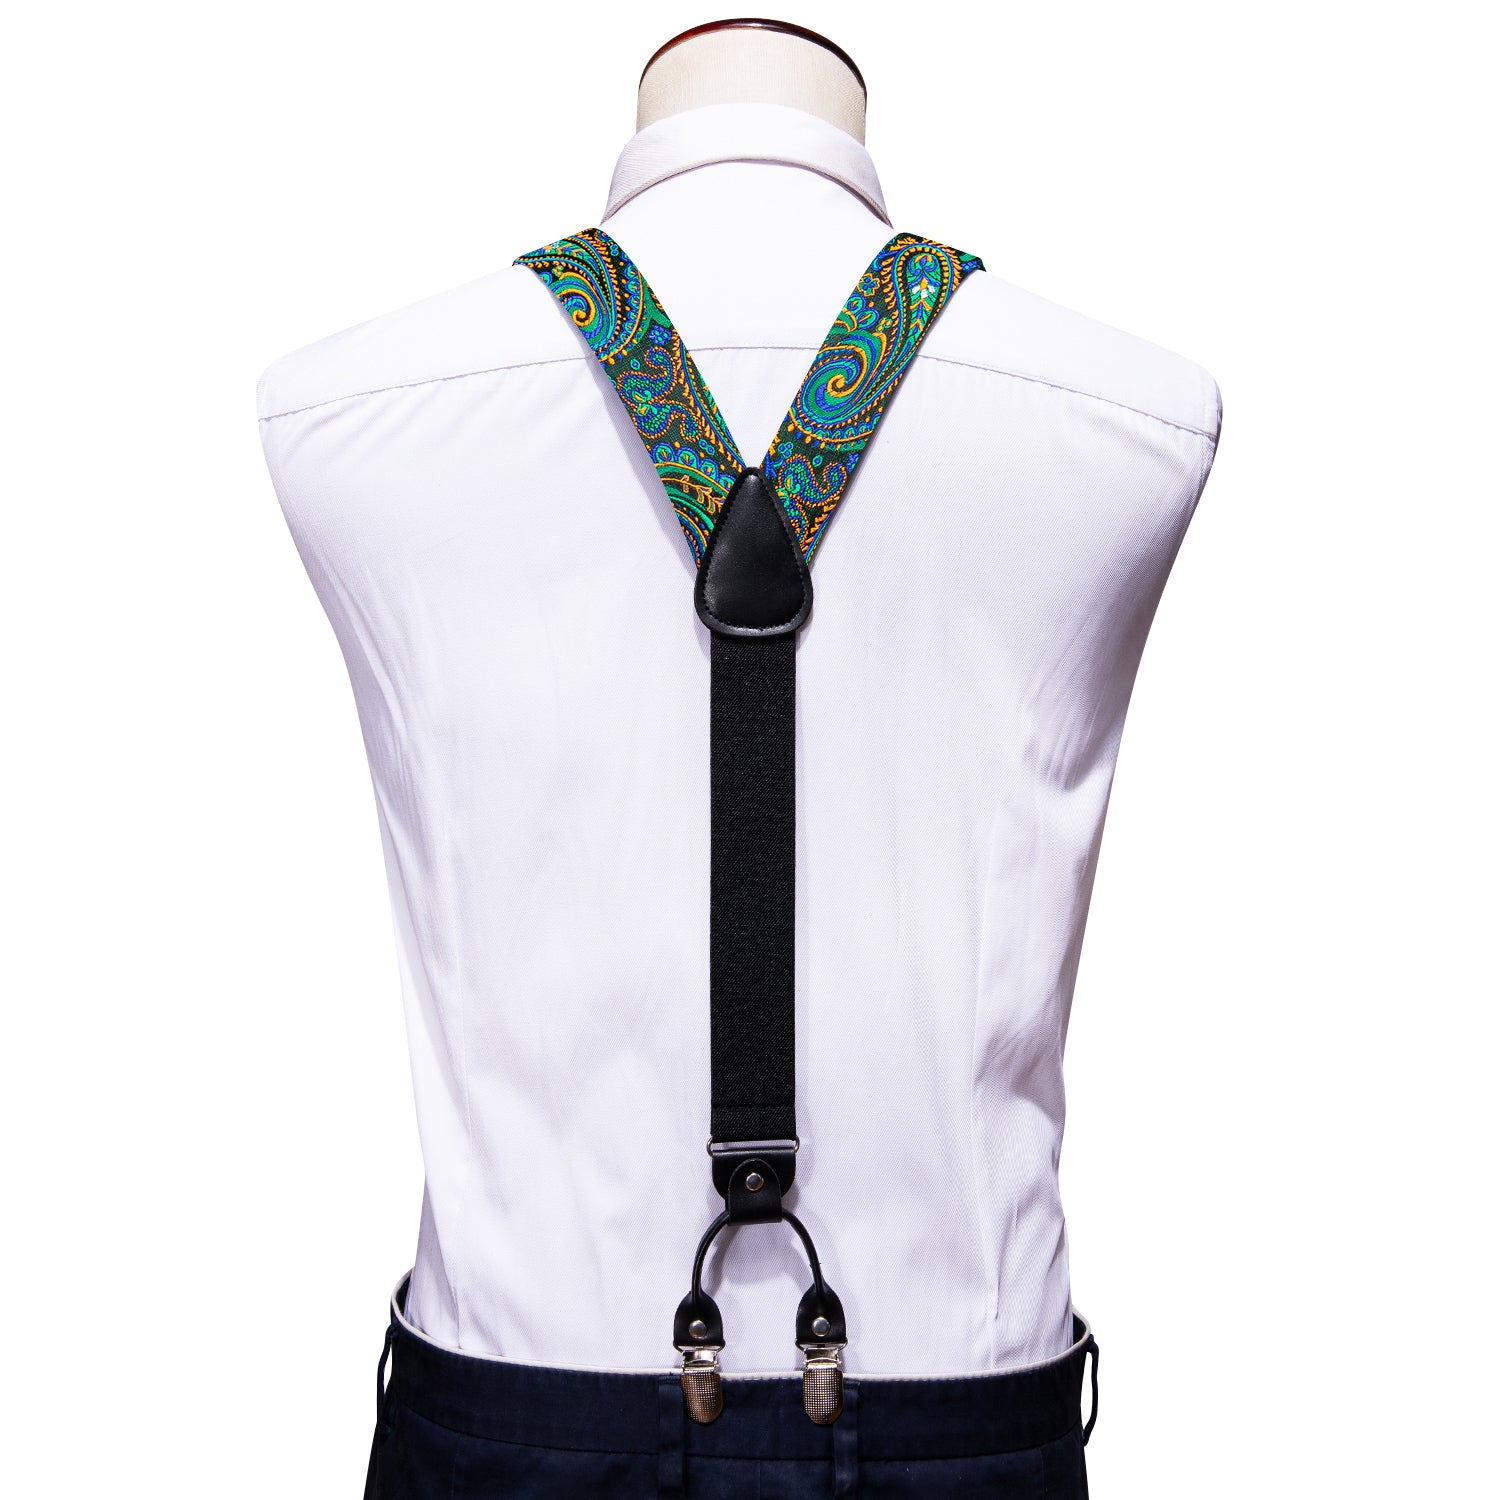 Teal Blue Floral Y Back Adjustable Bow Tie Suspenders Set